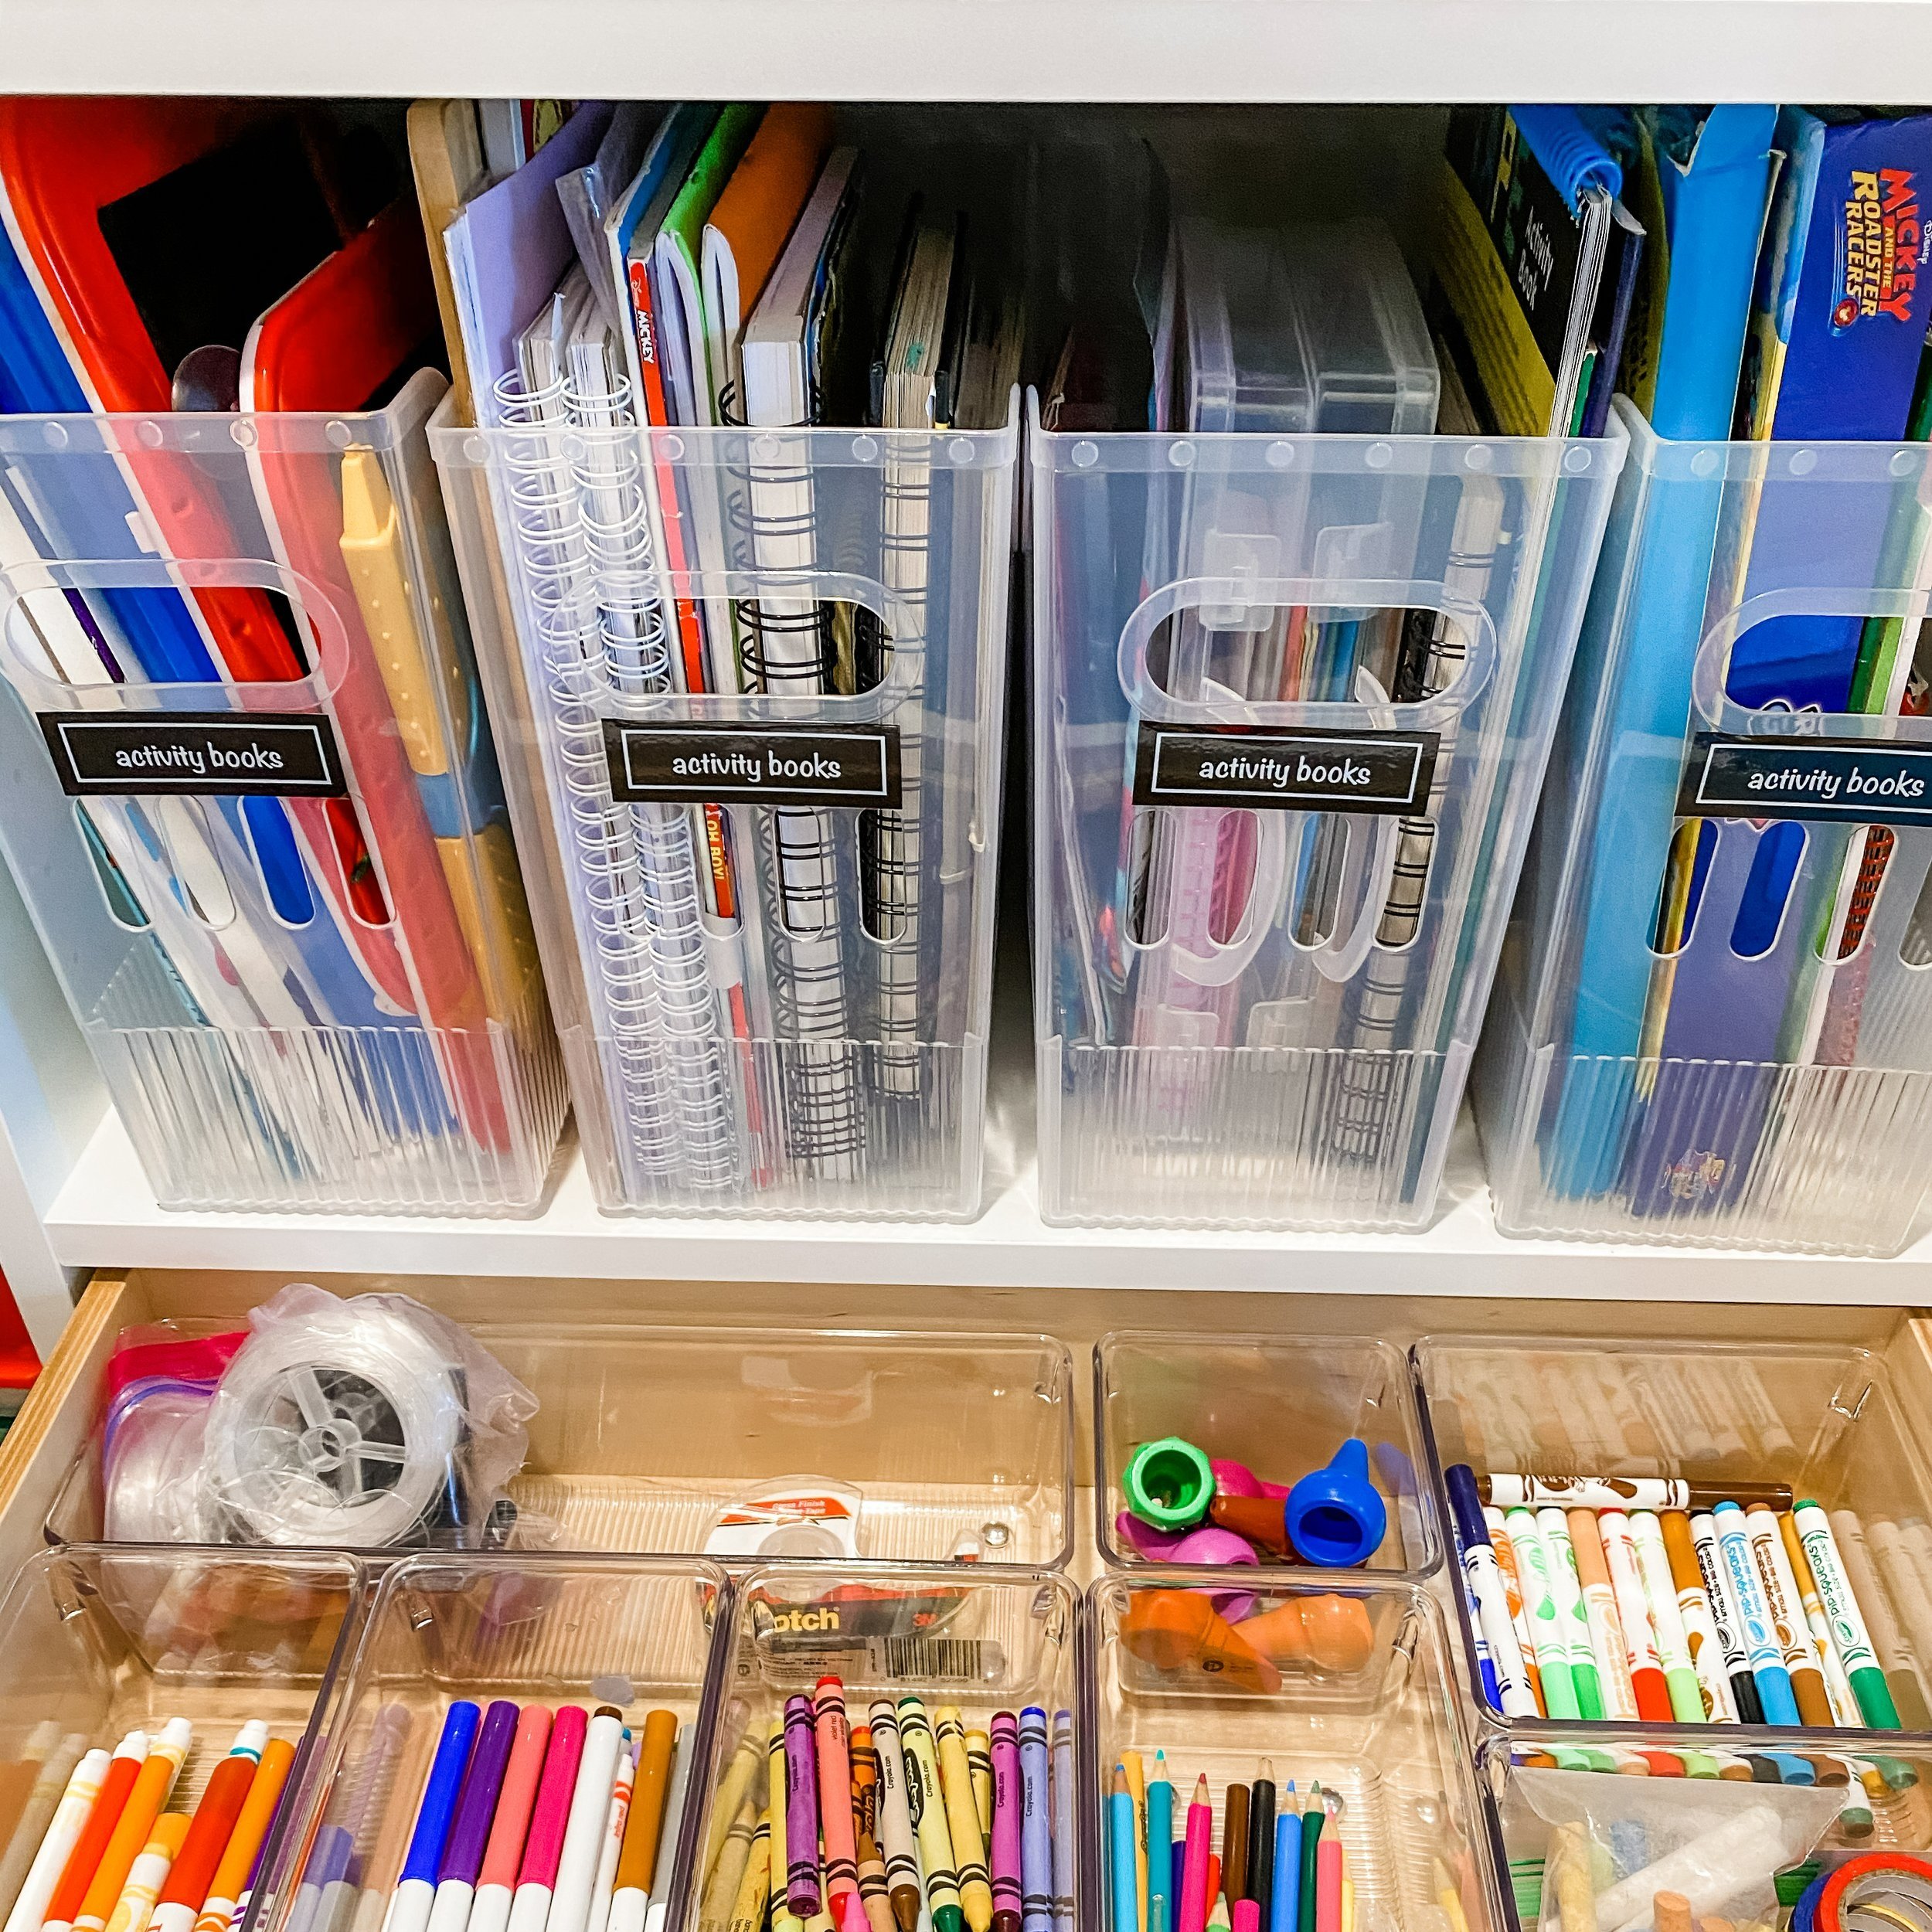 5 Steps to Organizing Your Kids' Art Supplies, RíOrganize